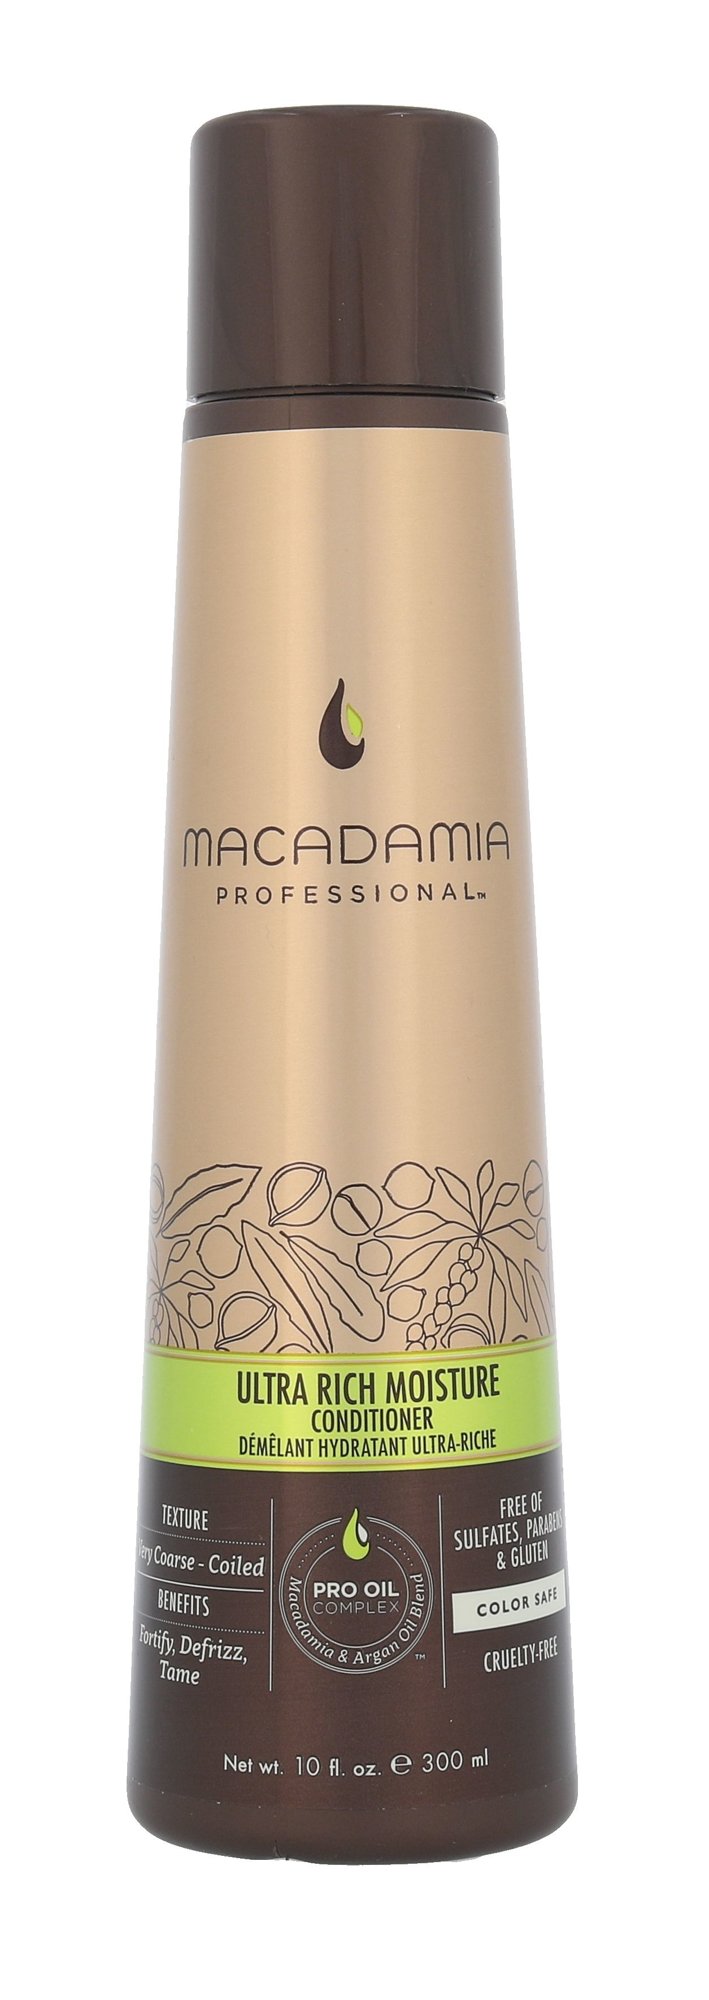 Macadamia Professional Ultra Rich Moisture 300ml kondicionierius